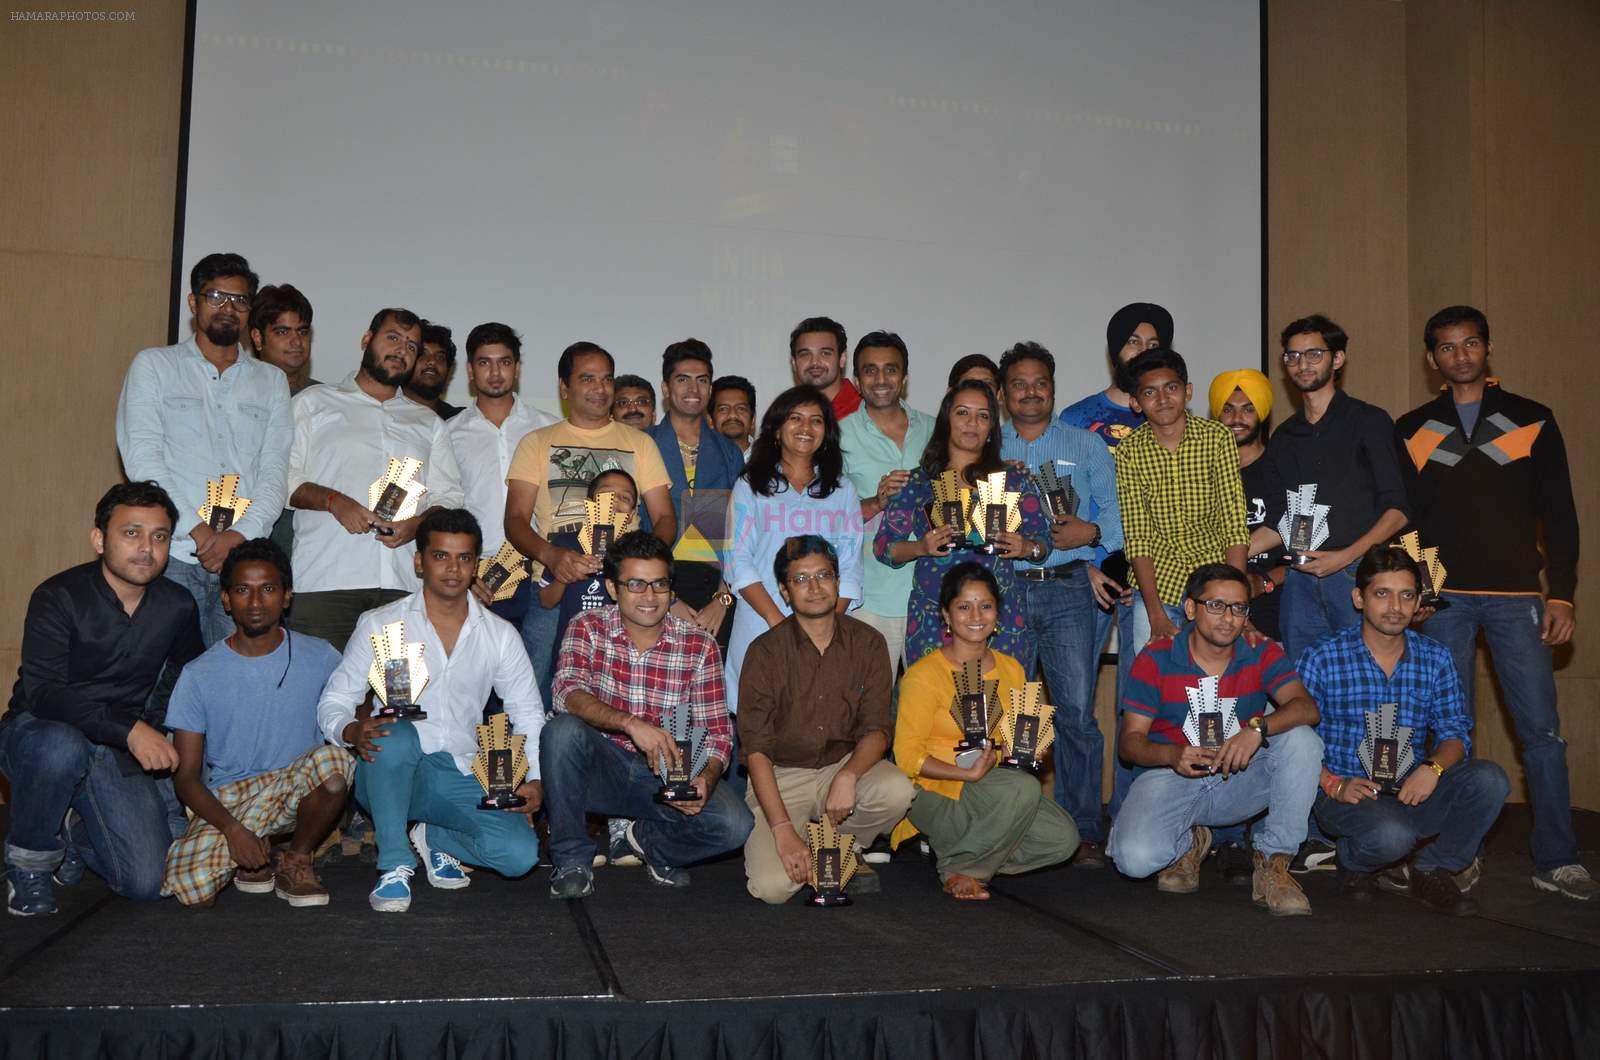 Mahaakshay Chakraborty at India Mobile Film Festival in Westin, Mumbai on 18th June 2015